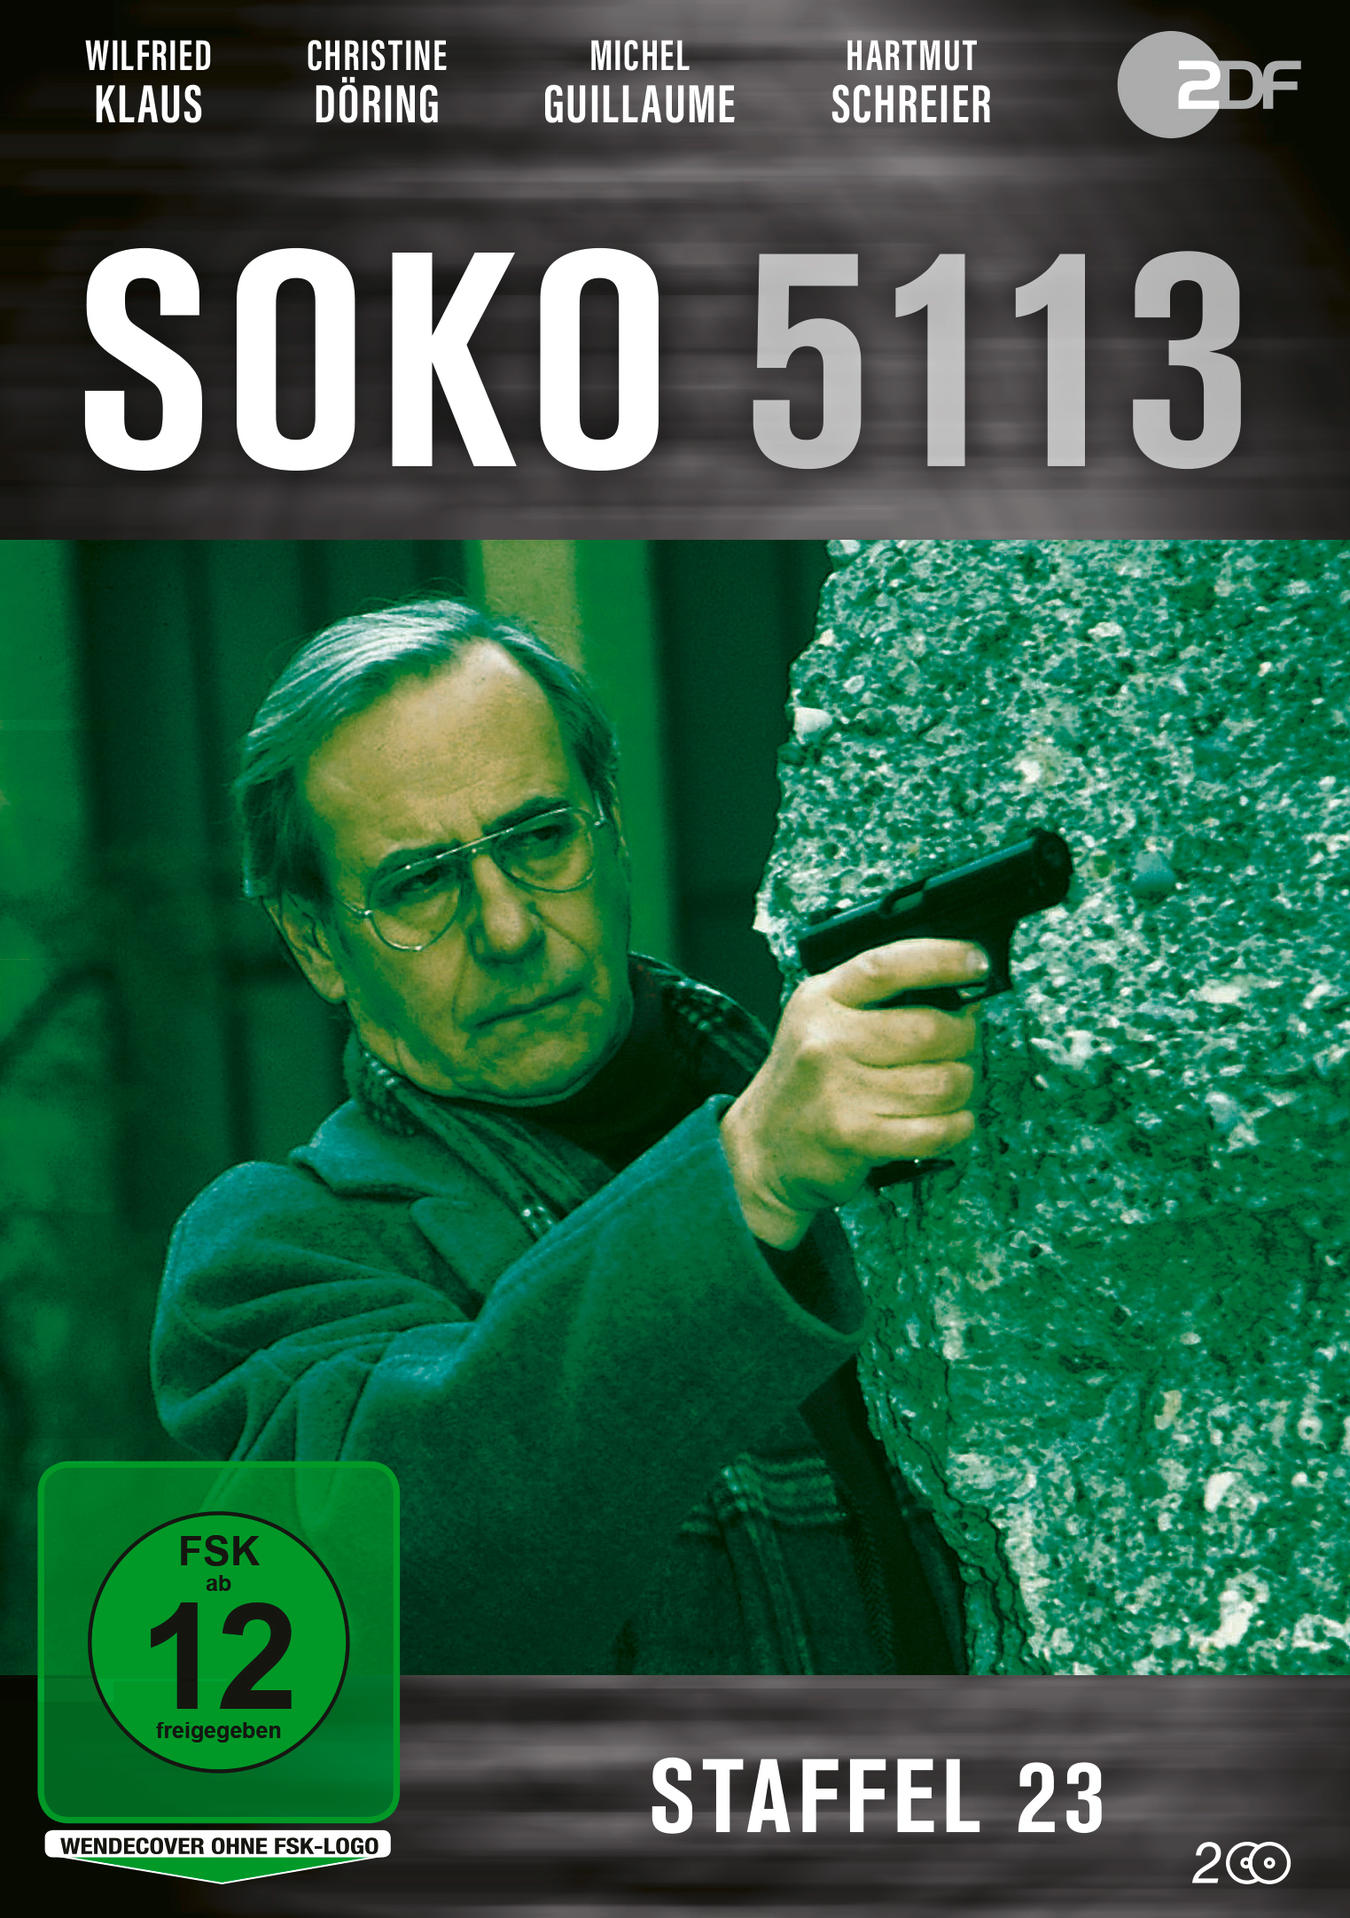 - Staffel 23 5113 Soko DVD